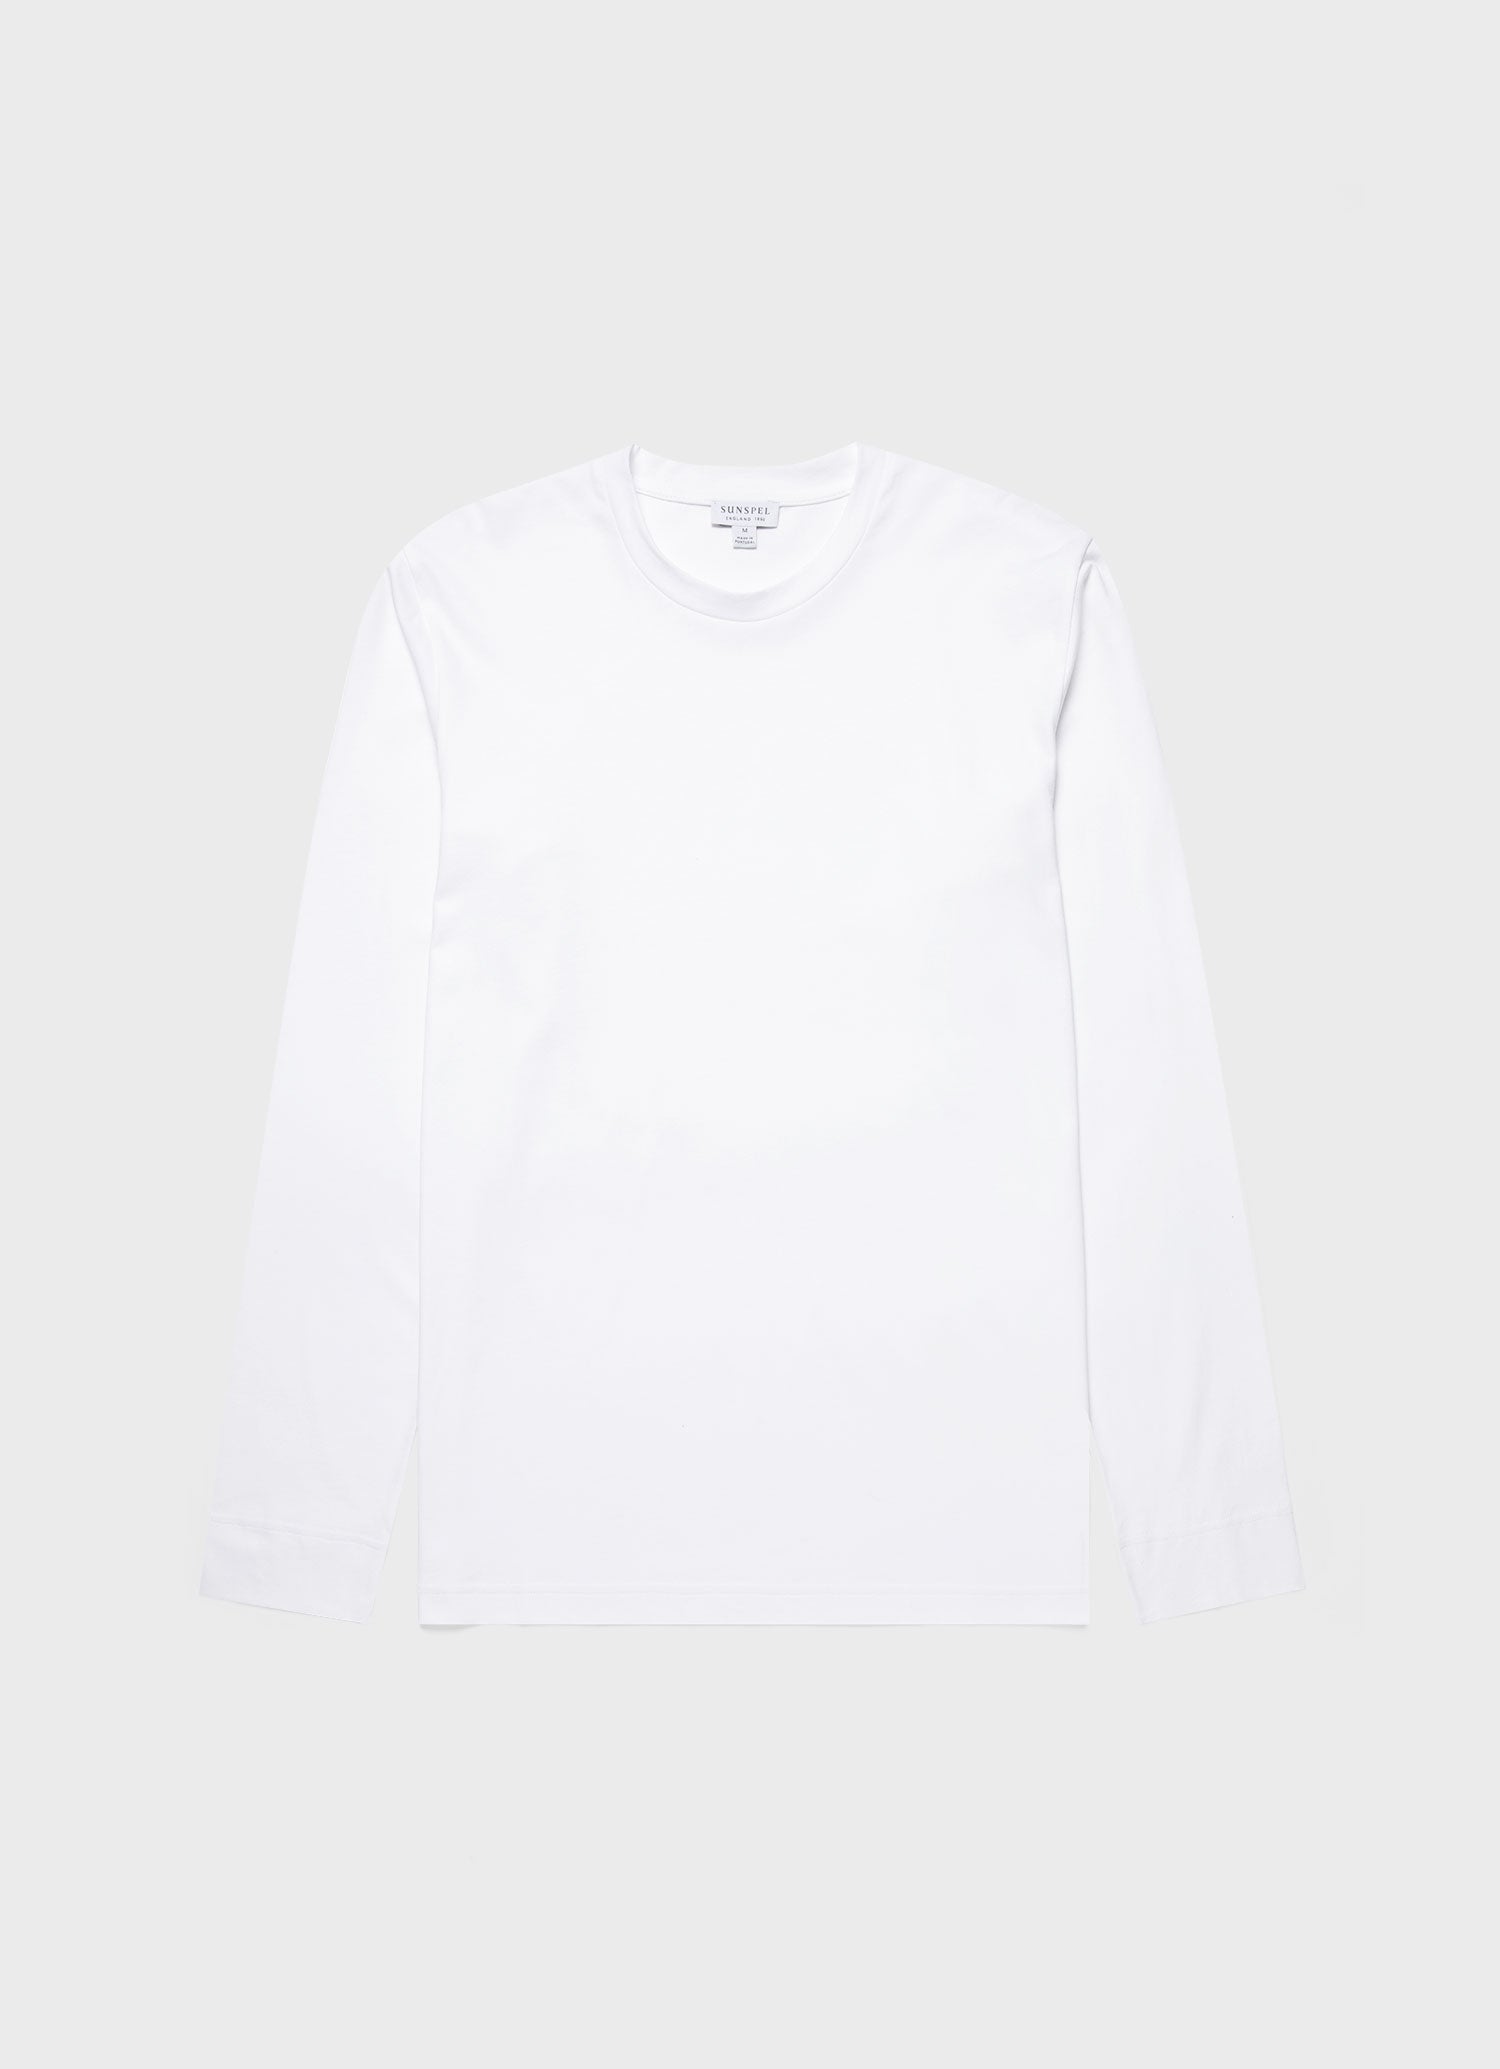 Men's Long Sleeve Riviera Midweight T-shirt in White | Sunspel